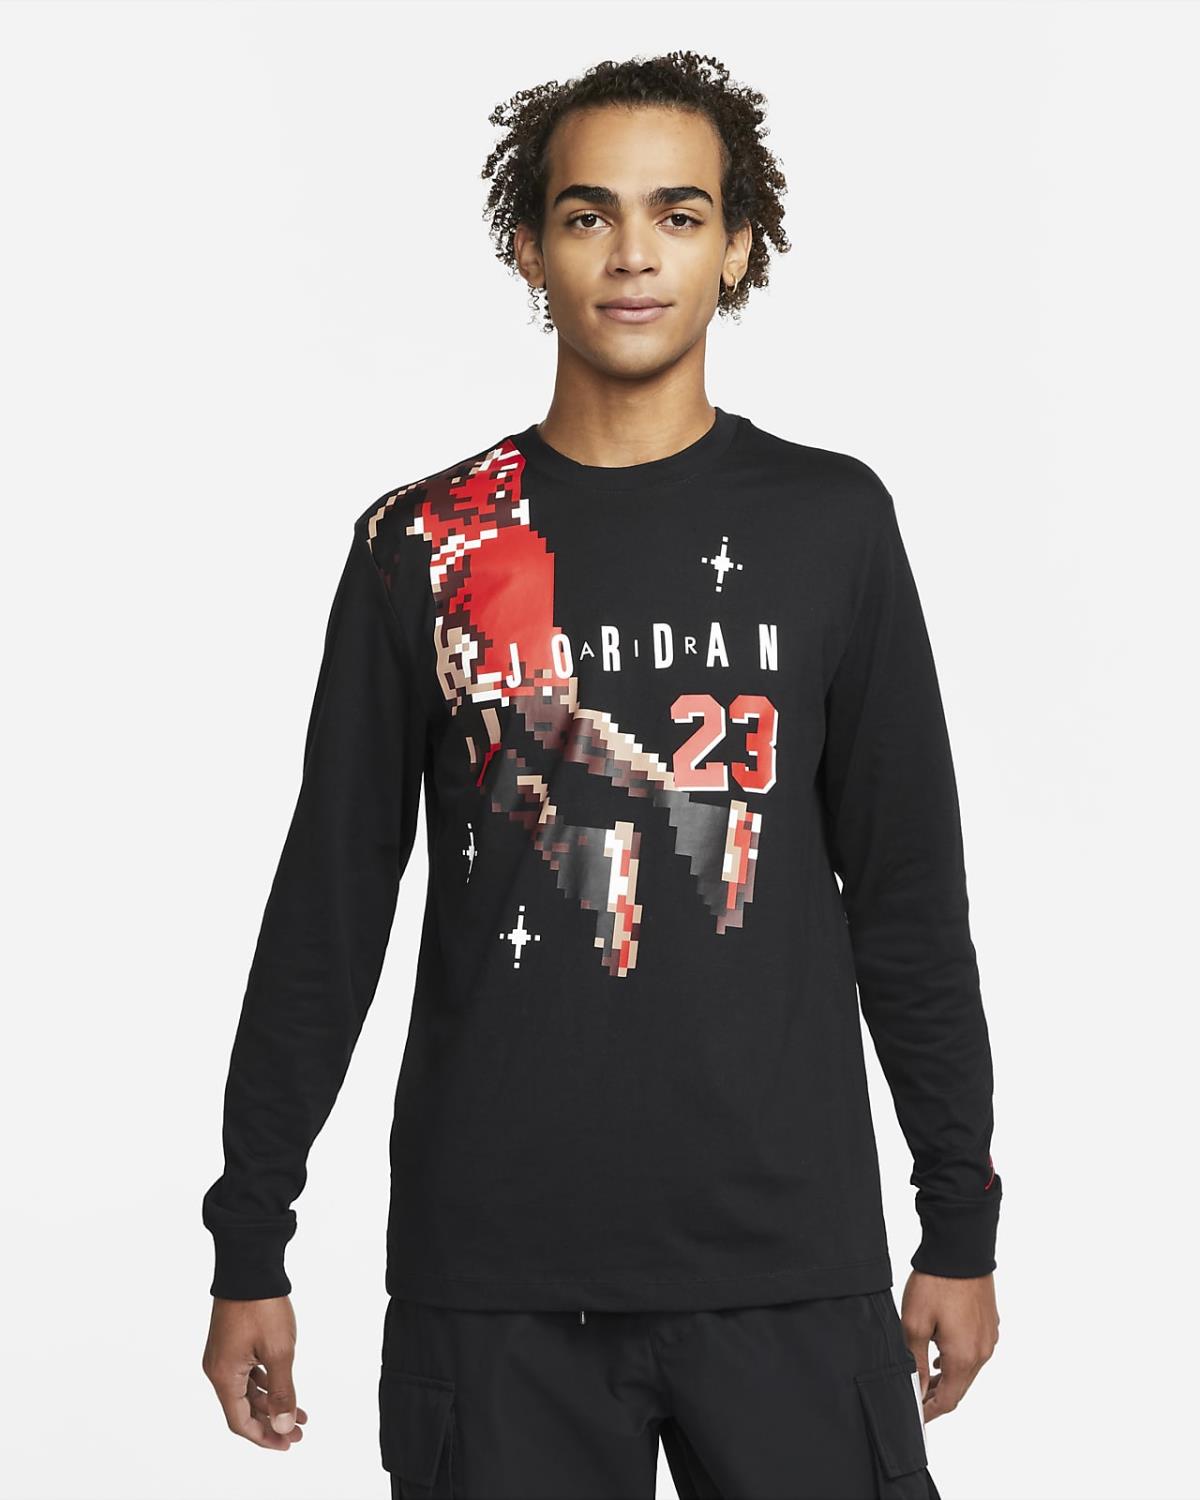 Jordan T-shirt manica lunga da uomo  DC9793 010 nero